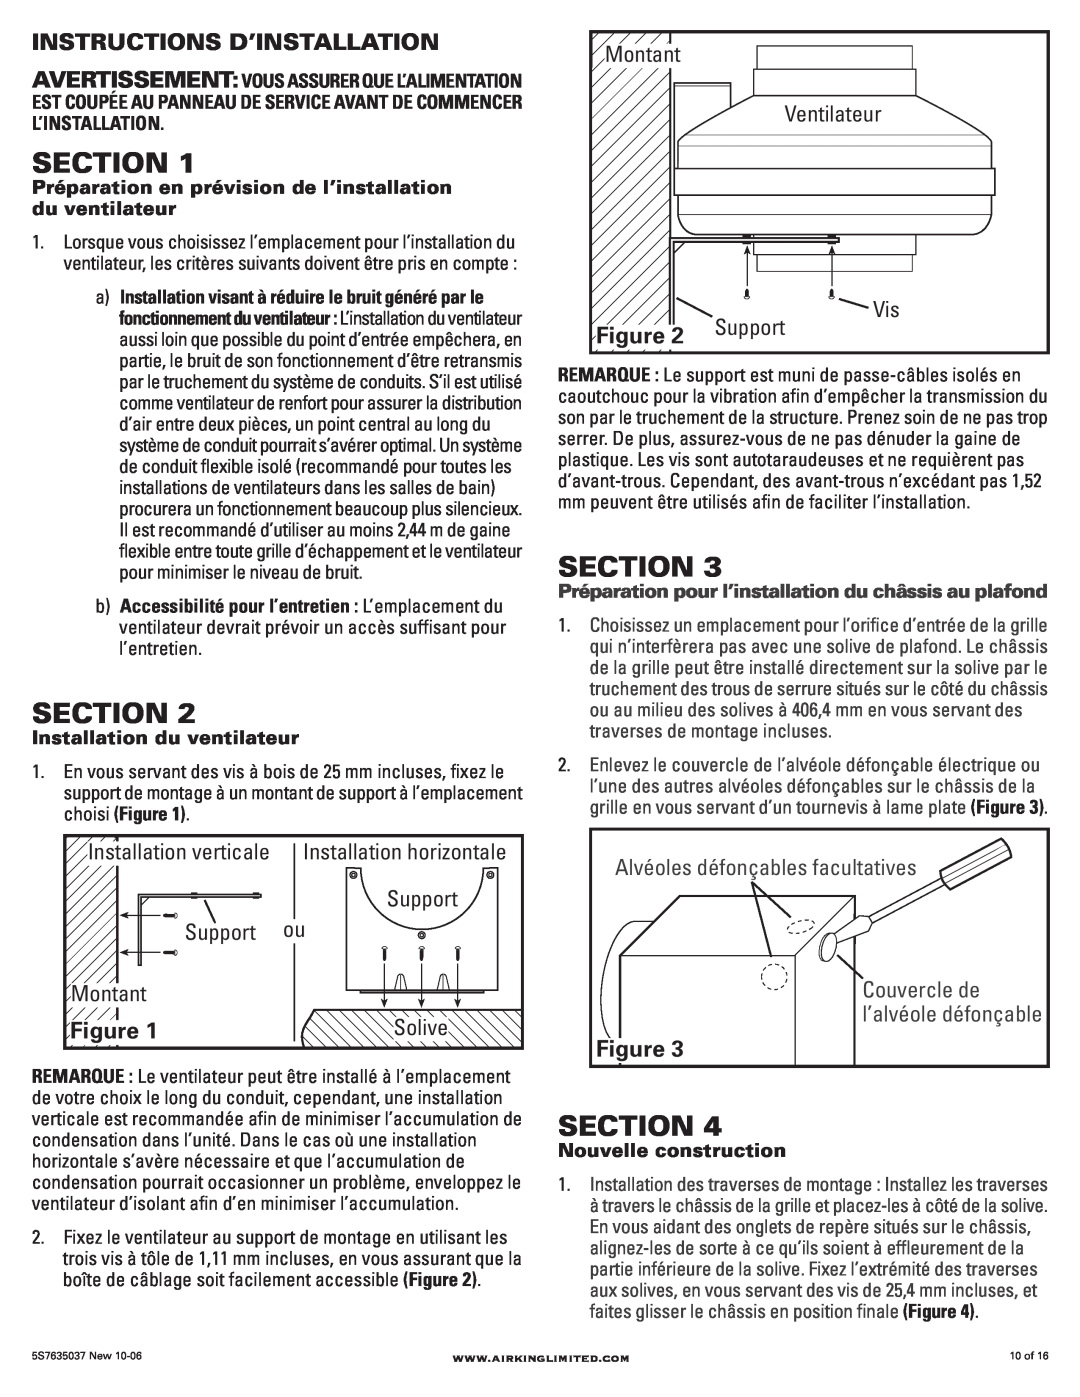 Air King AIK26YL, AIK14XL manual Instructions D’Installation, Section, Installation horizontale, Installation du ventilateur 